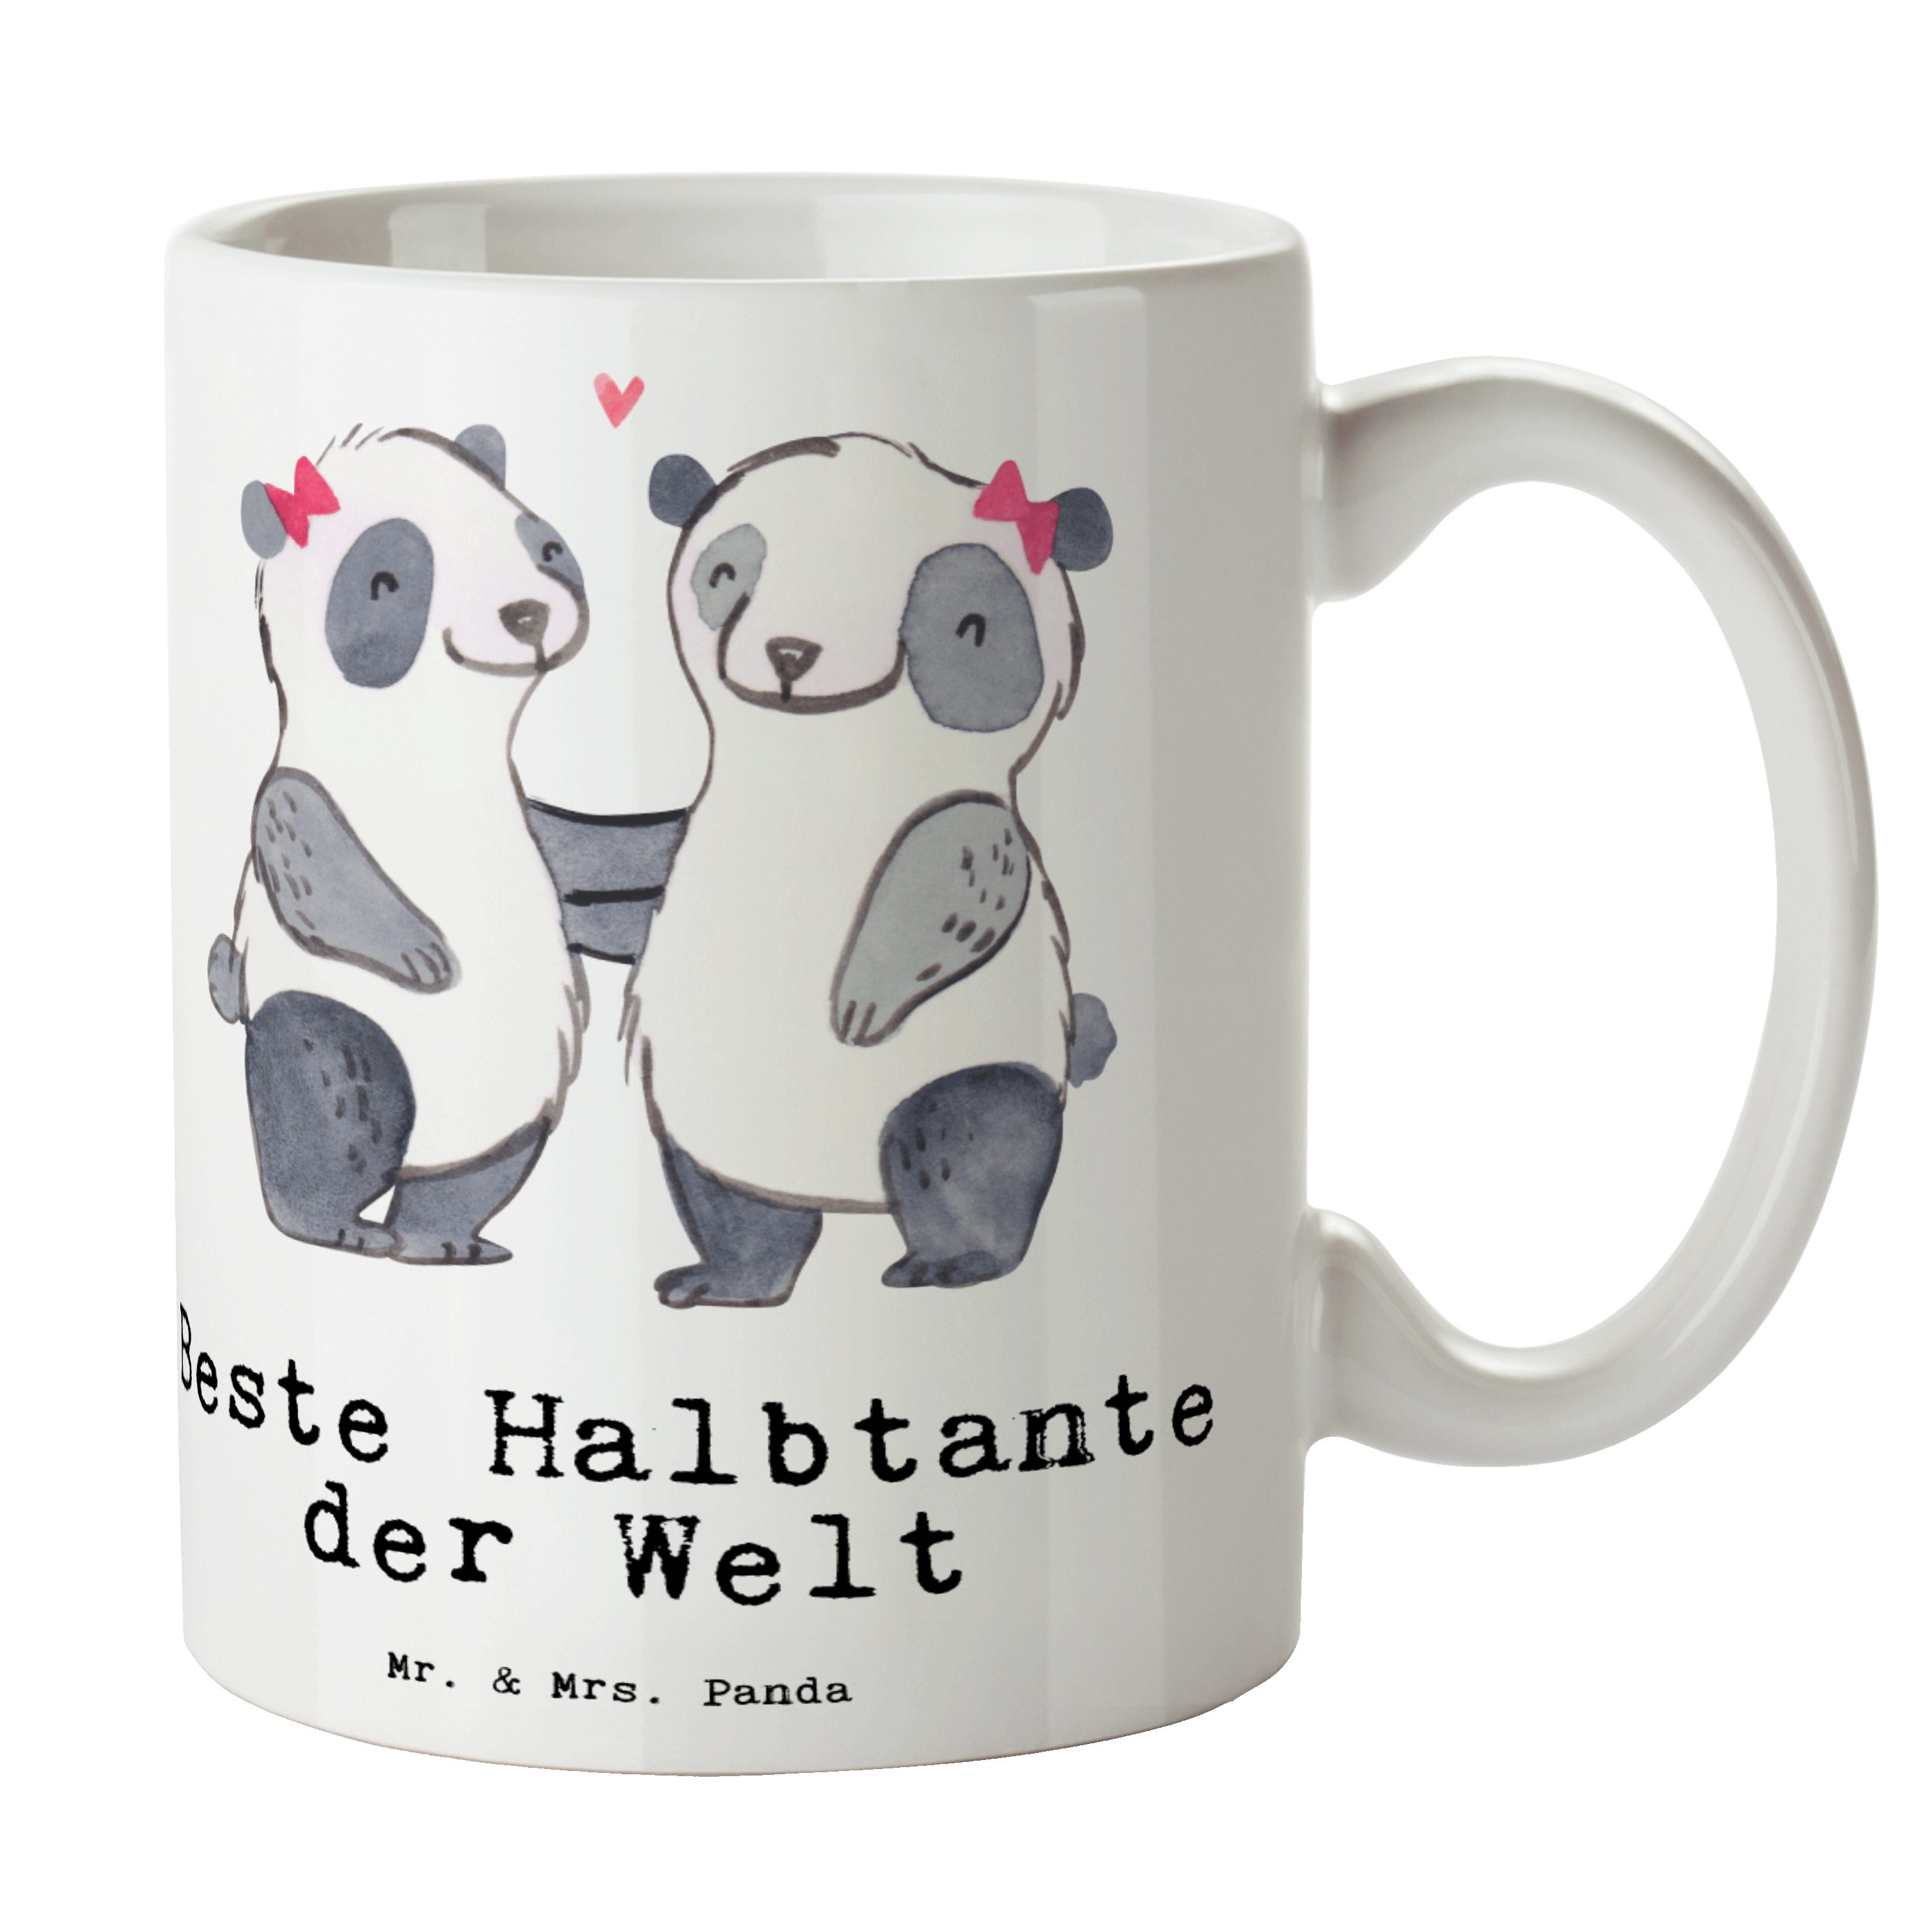 Mr. & Mrs. Panda Tasse Panda Beste Halbtante der Welt - Weiß - Geschenk, Mitbringsel, Kaffeetasse, Stief, Becher, Geschenkidee, Tee, Schenken, Familie, Kaffeebecher, Büro, Keramik